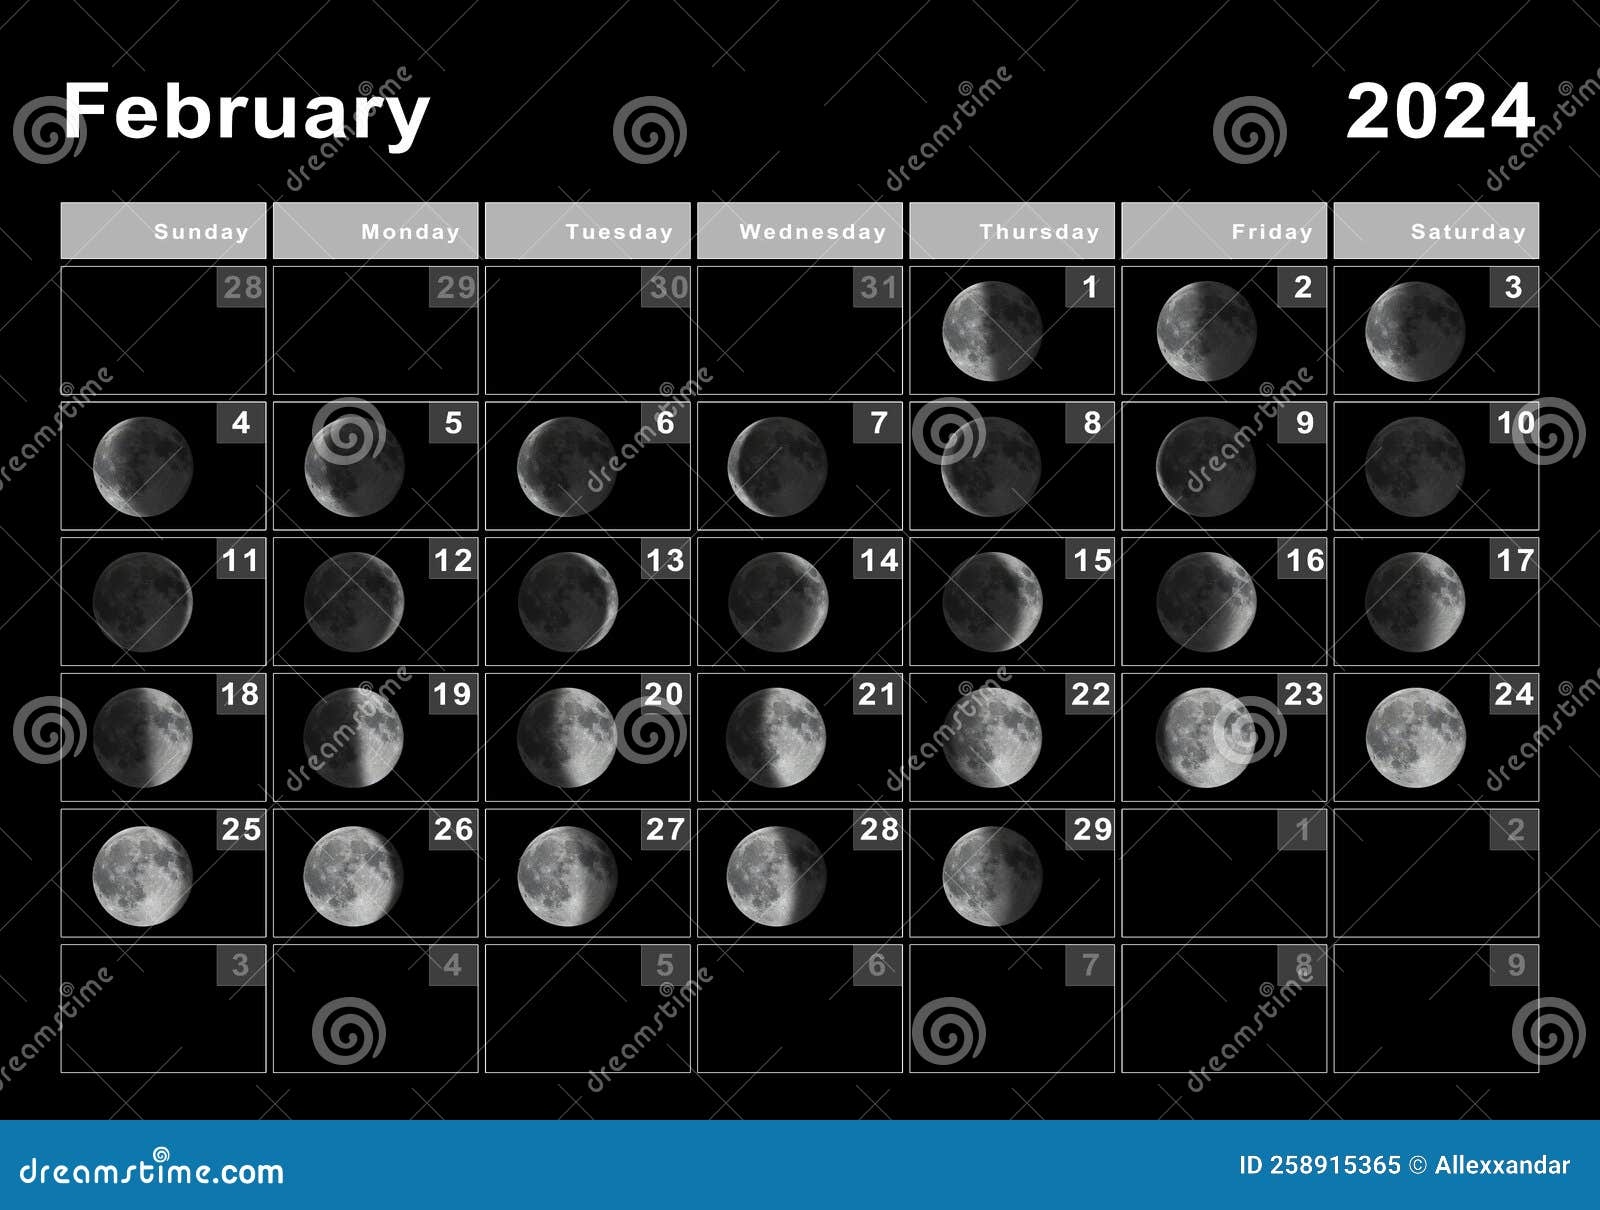 February 2024 Lunar Calendar Moon Cycles Stock Illustration - Free Printable 2024 Calendar With Moon Phases